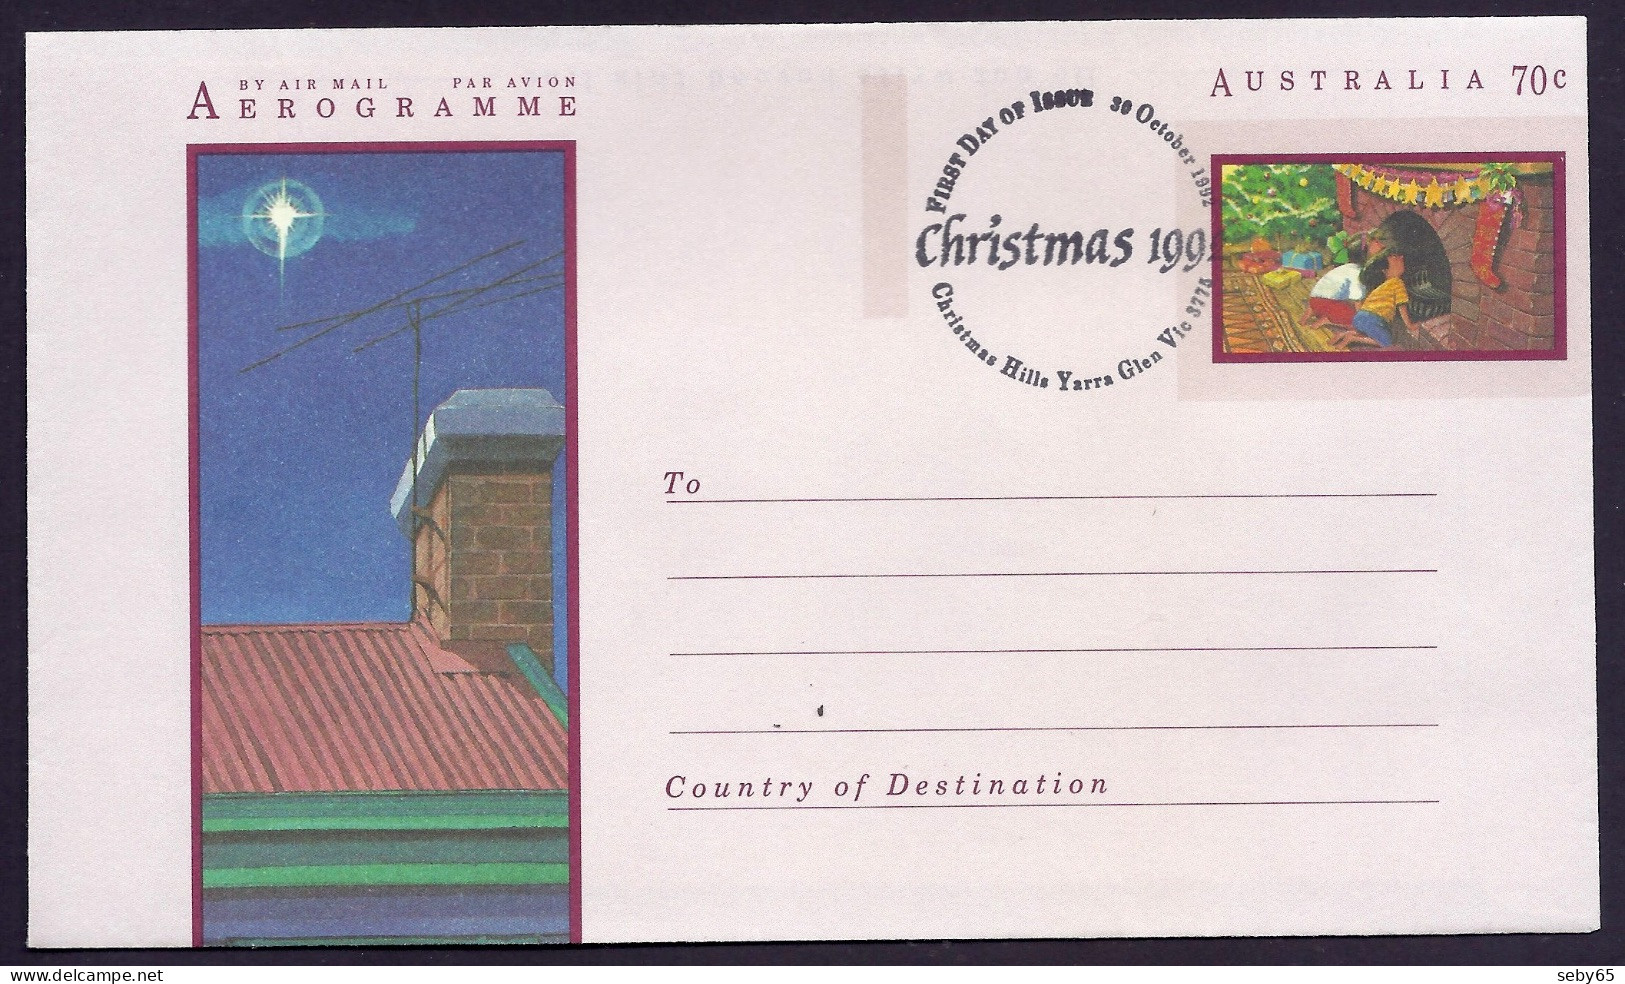 Australia 1992 Aerogramme - Christmas, Noel, Natale, Nativity, 70c - FDC Postmark - Aérogrammes